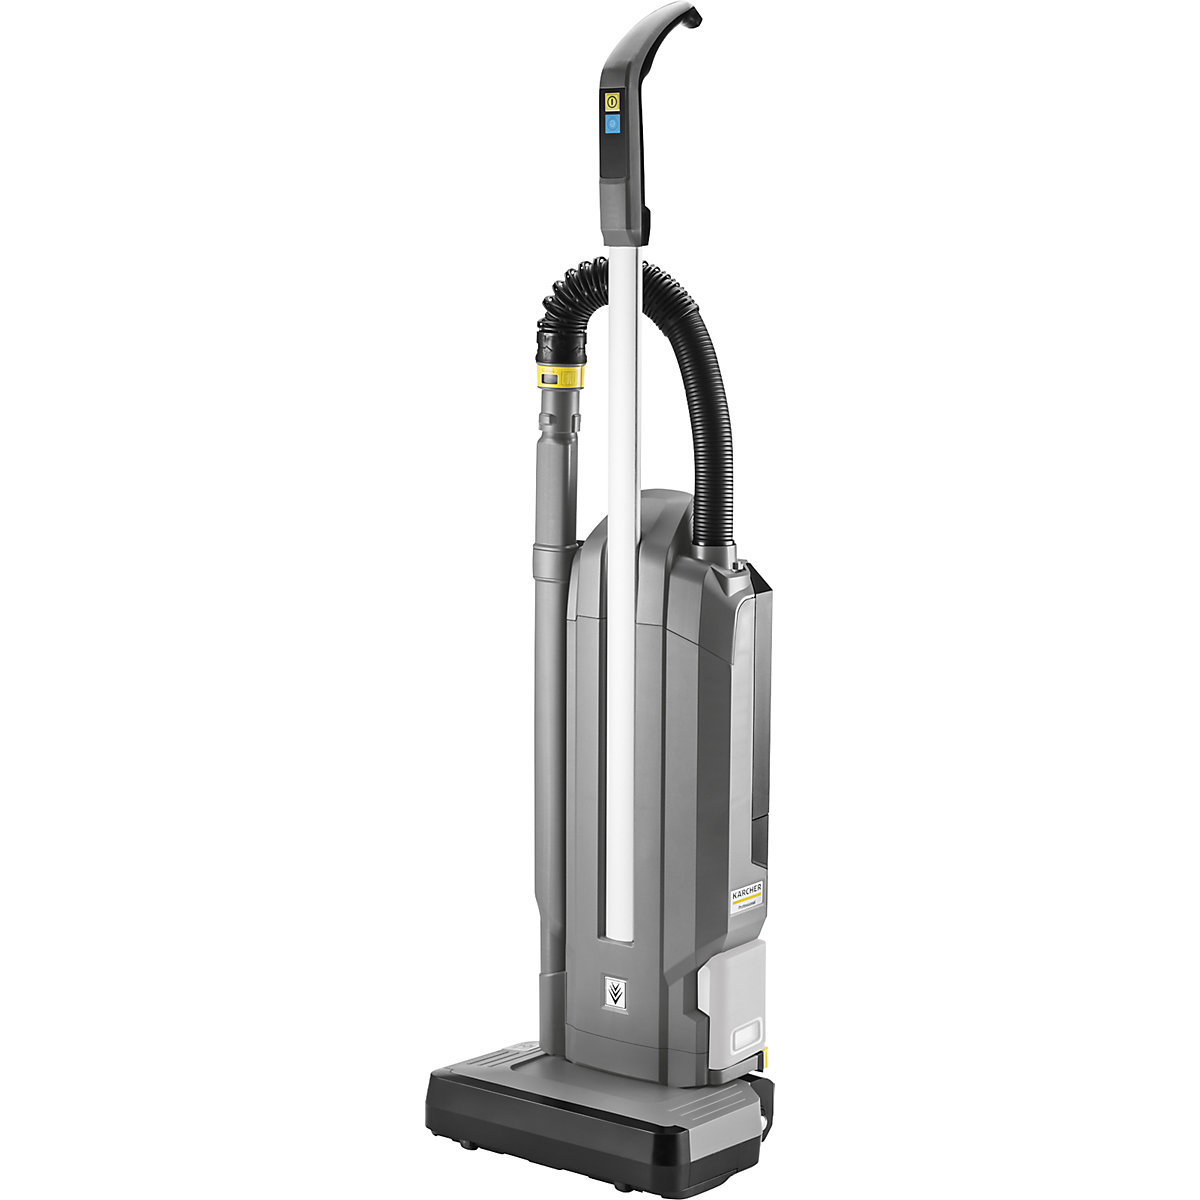 Cordless upright vacuum cleaner - Kärcher